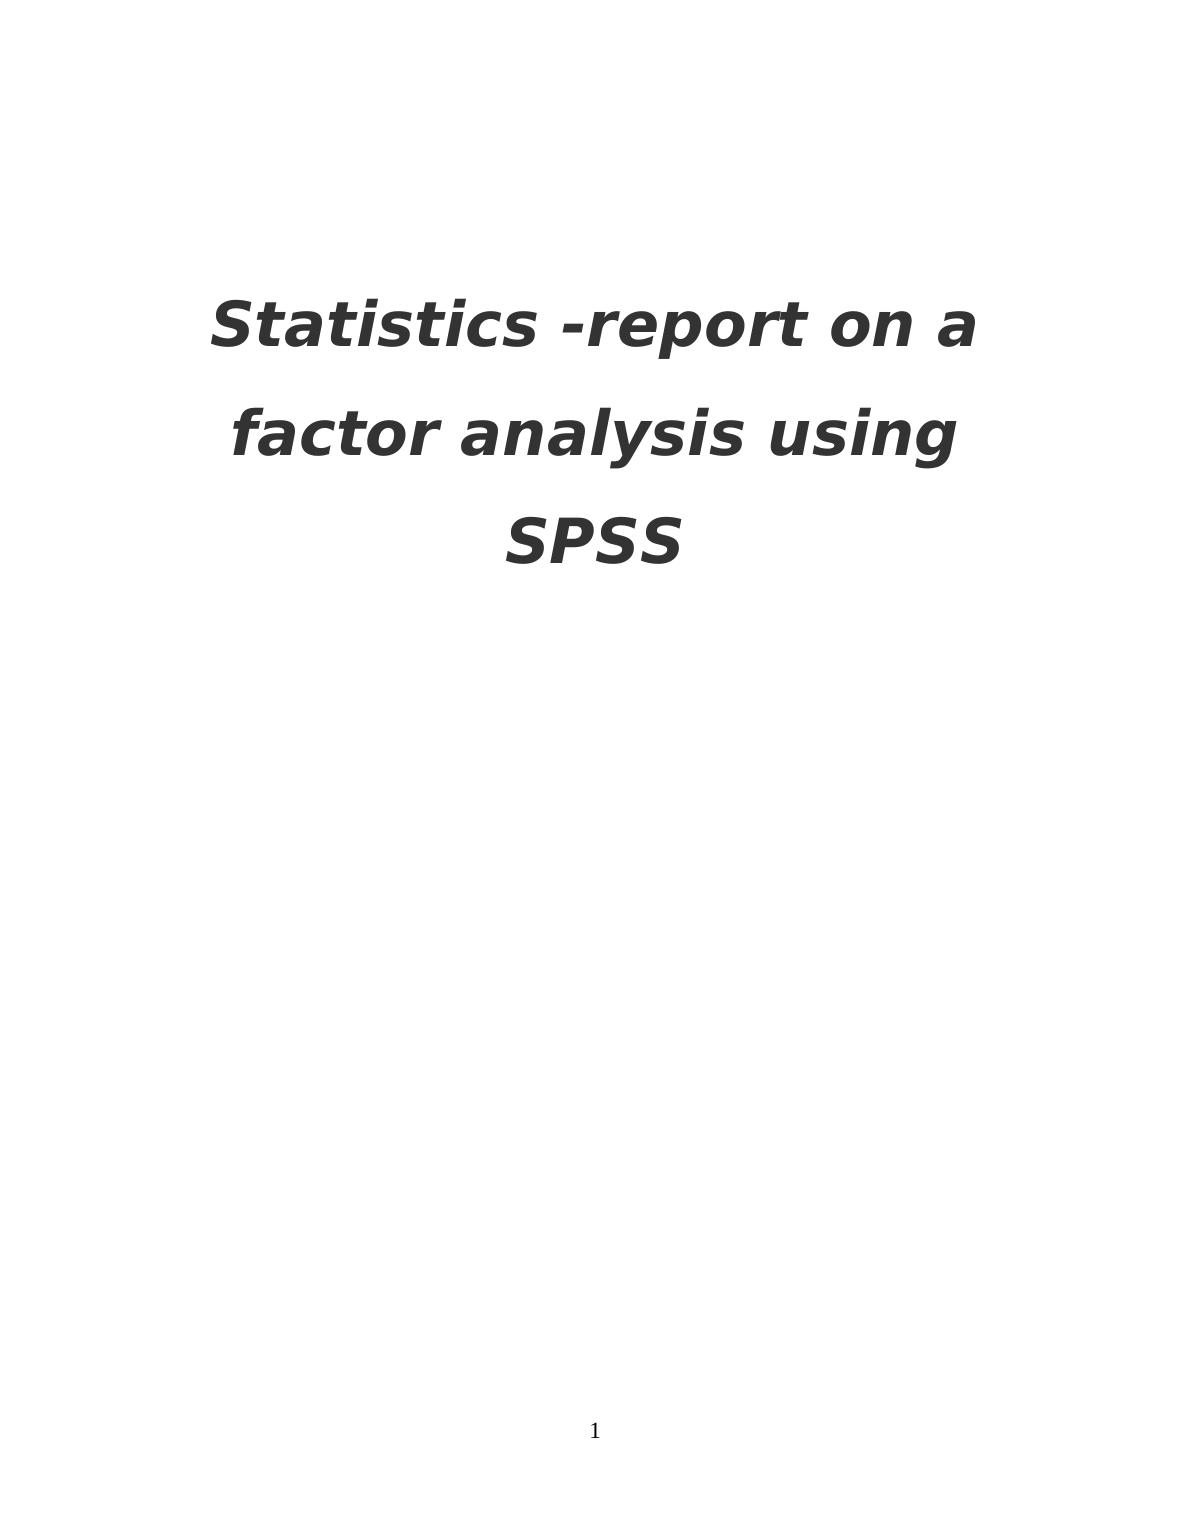 Factor Analysis using SPSS_1